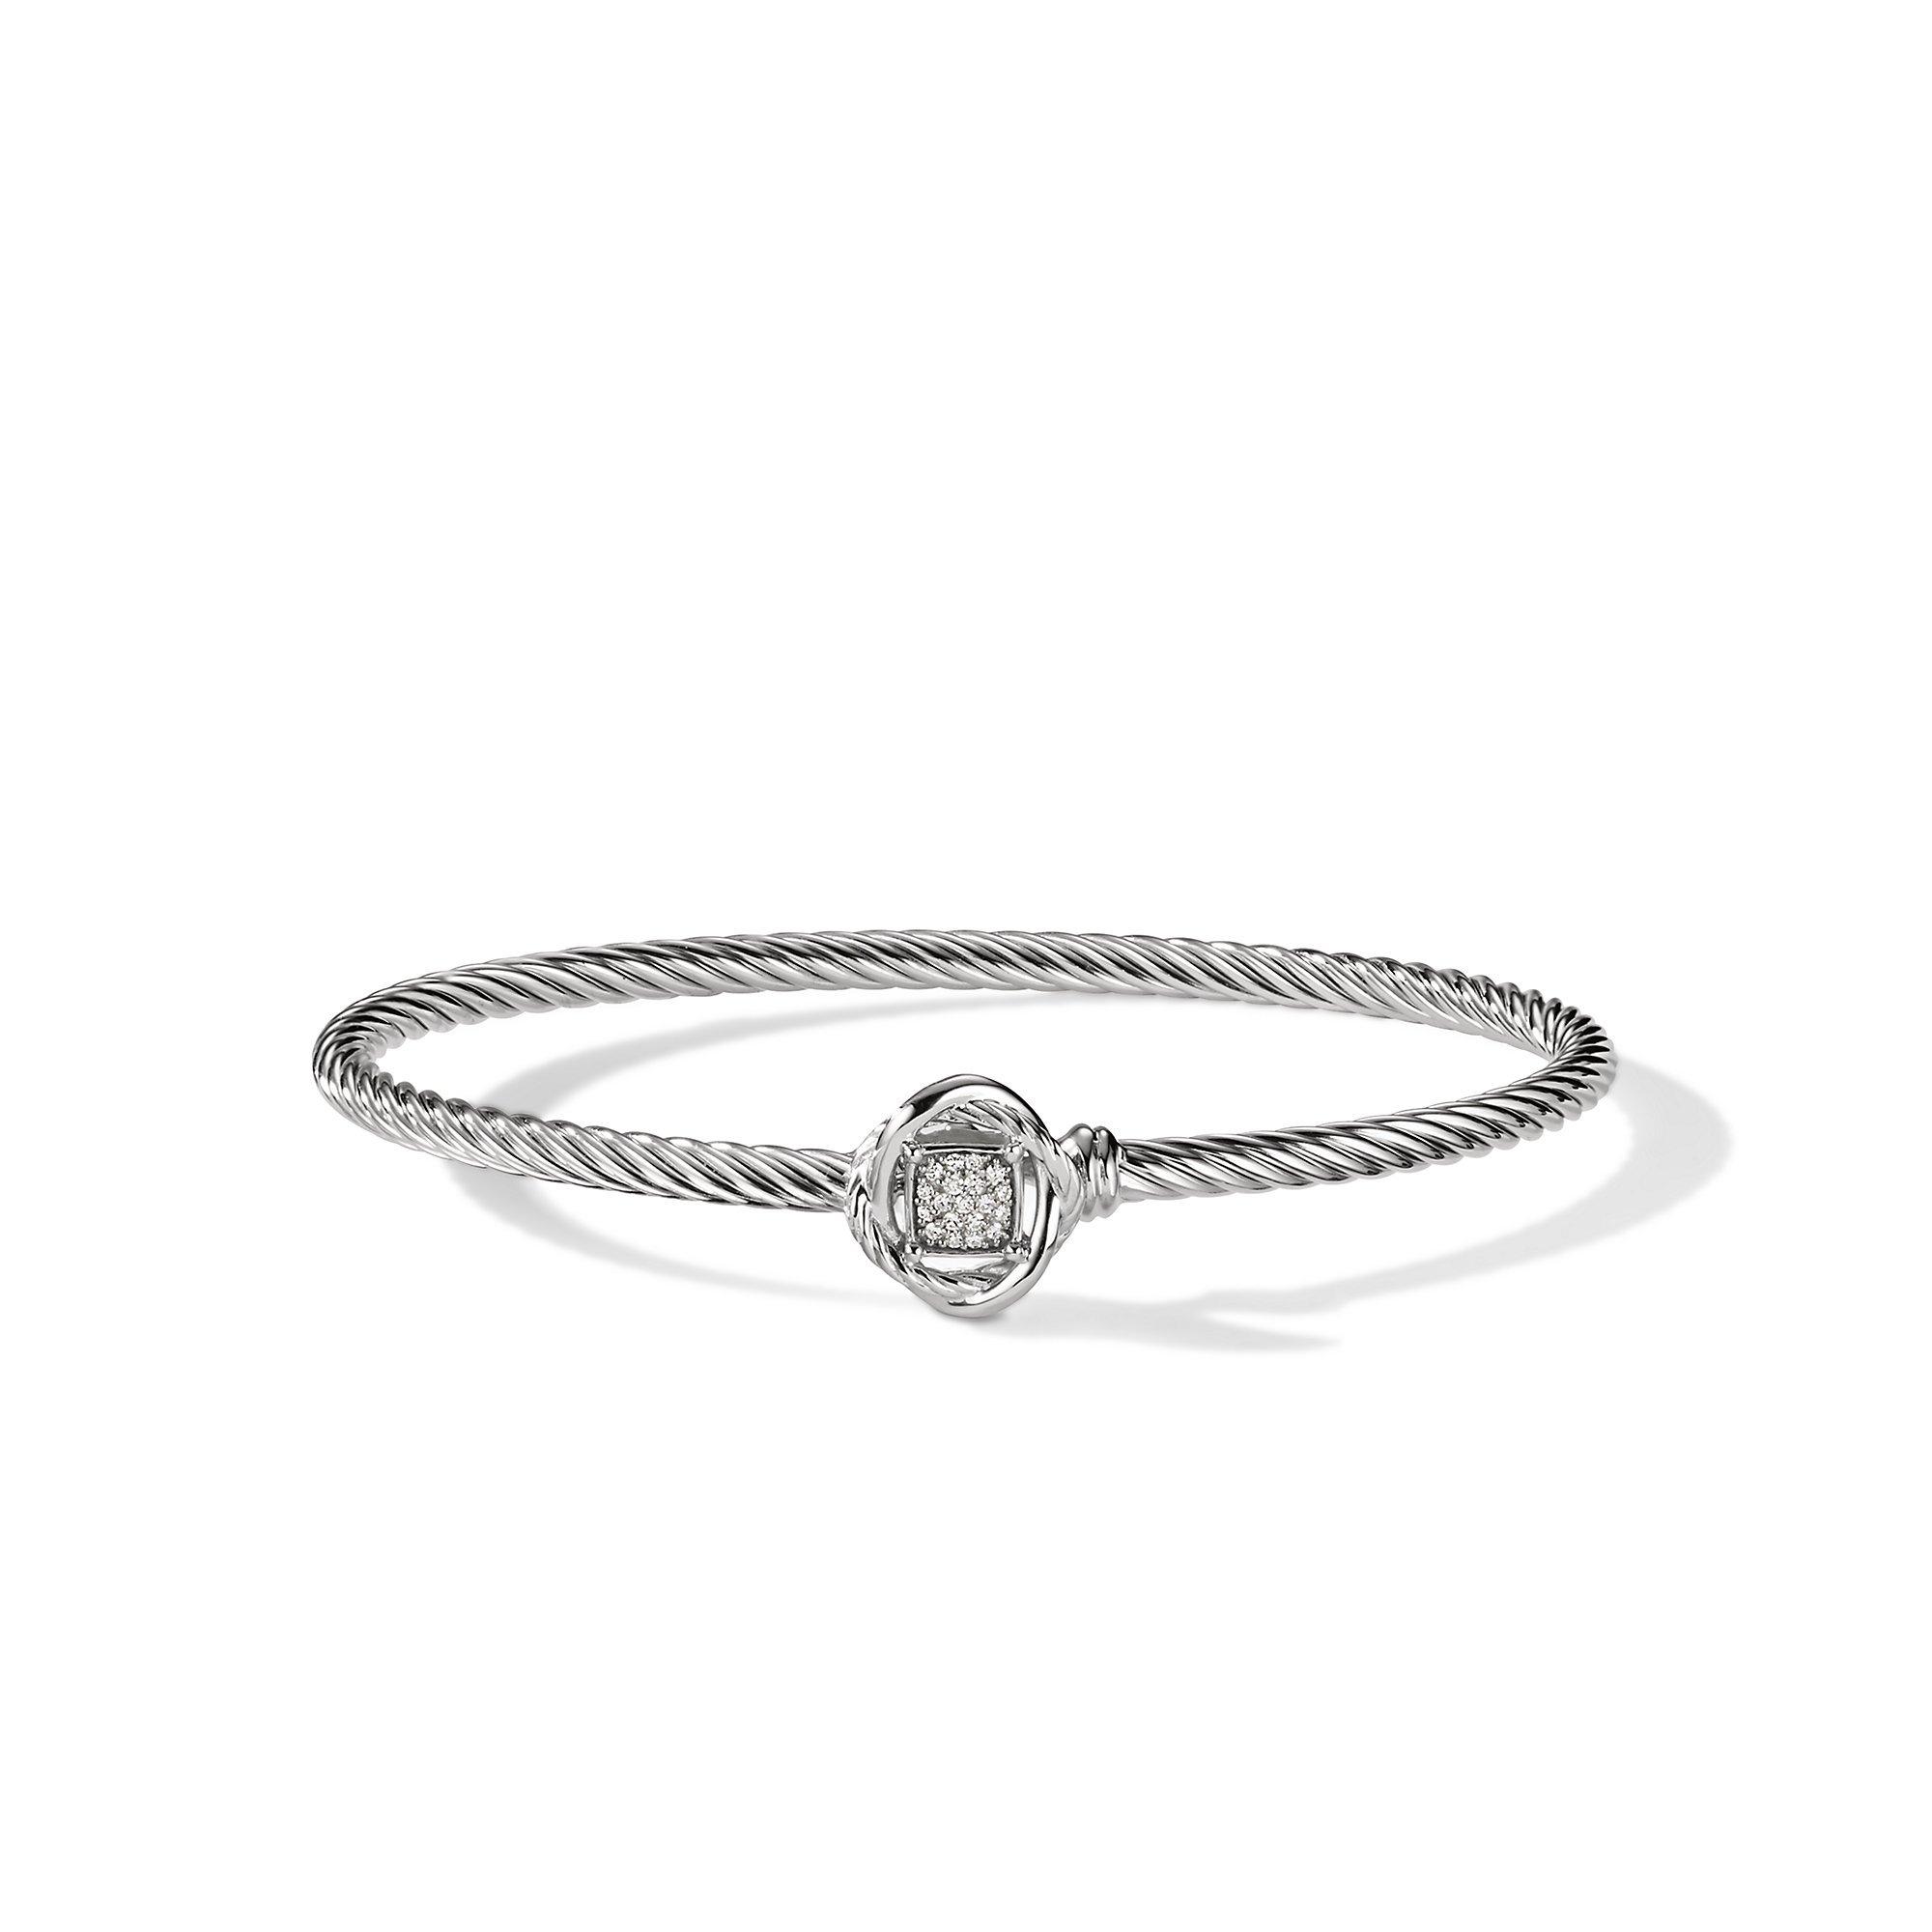 David Yurman Infinity Bracelet with Diamonds, size medium